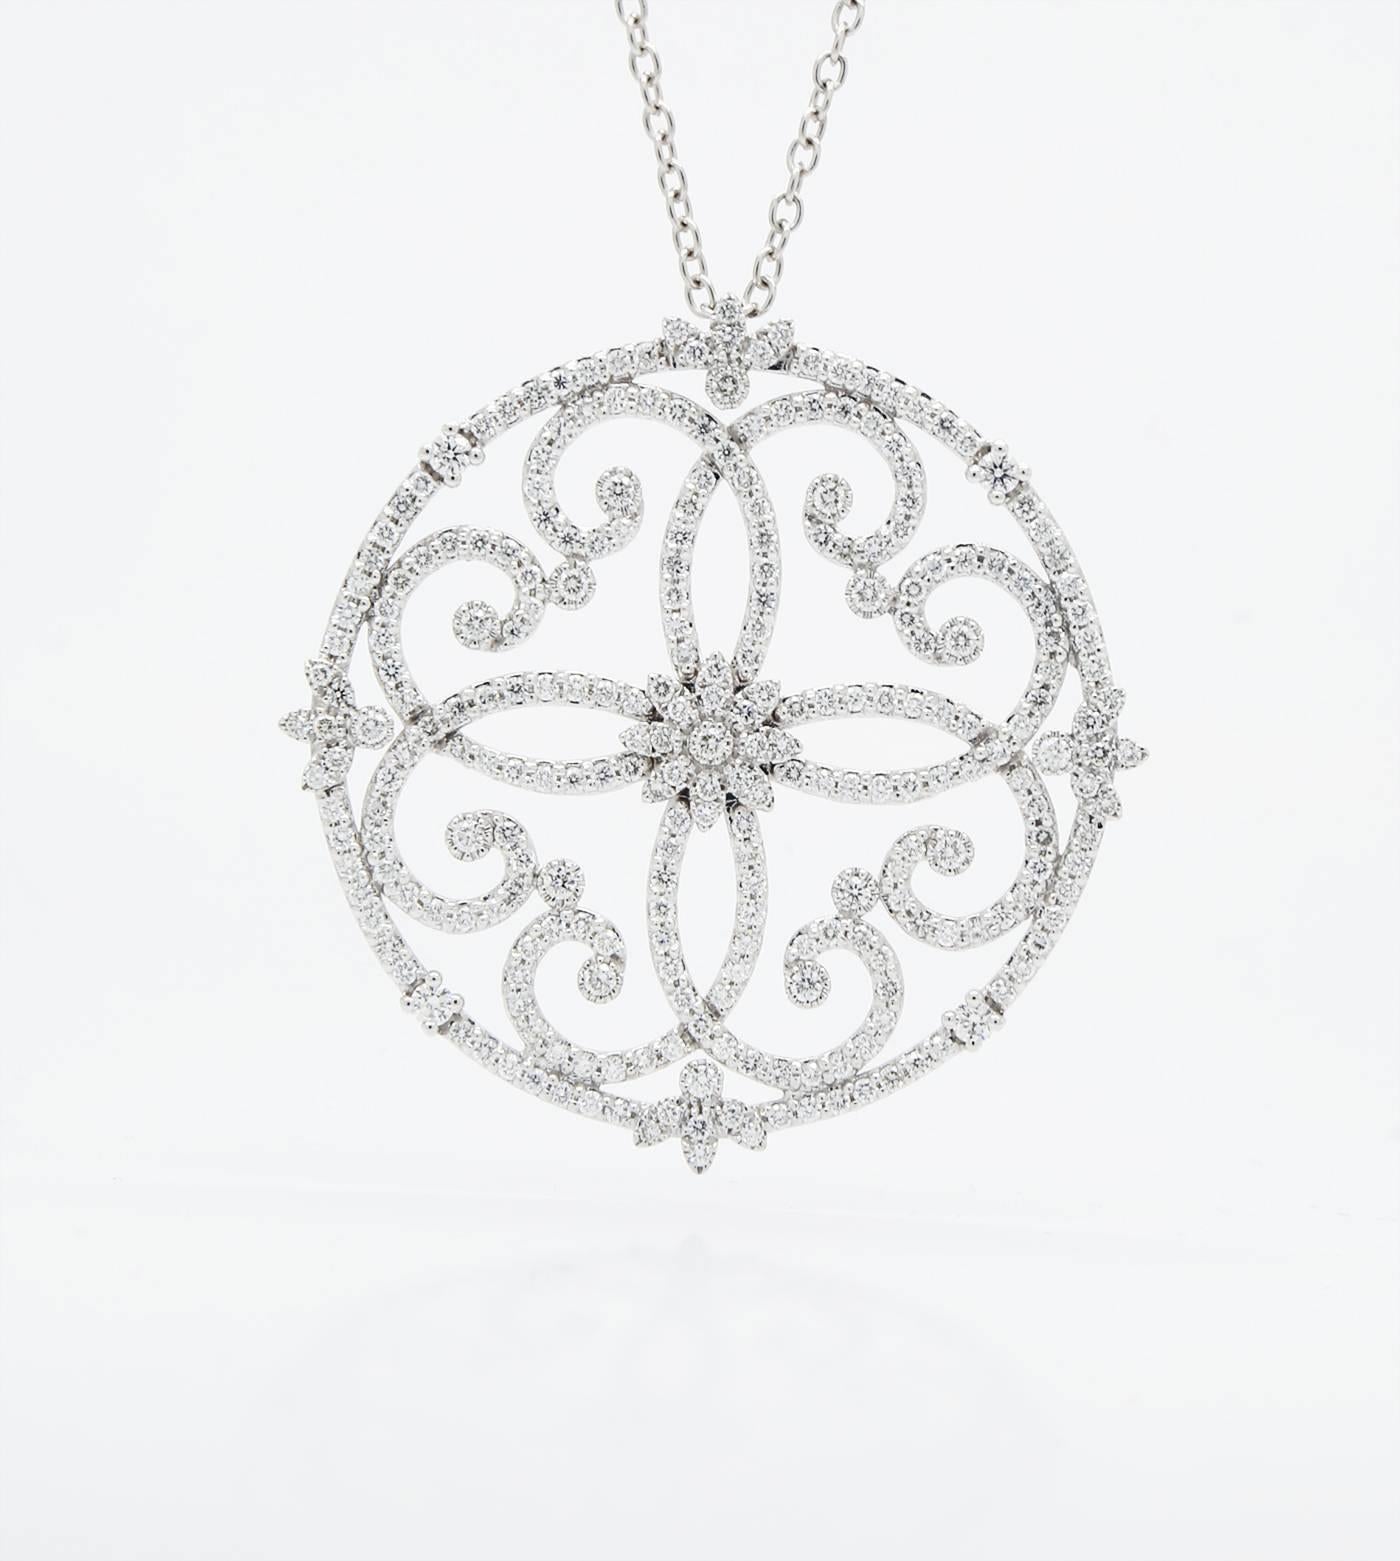 Ferrucci 2.75 Carat White Diamonds Necklace Handmade in 18 Karat White Gold 1